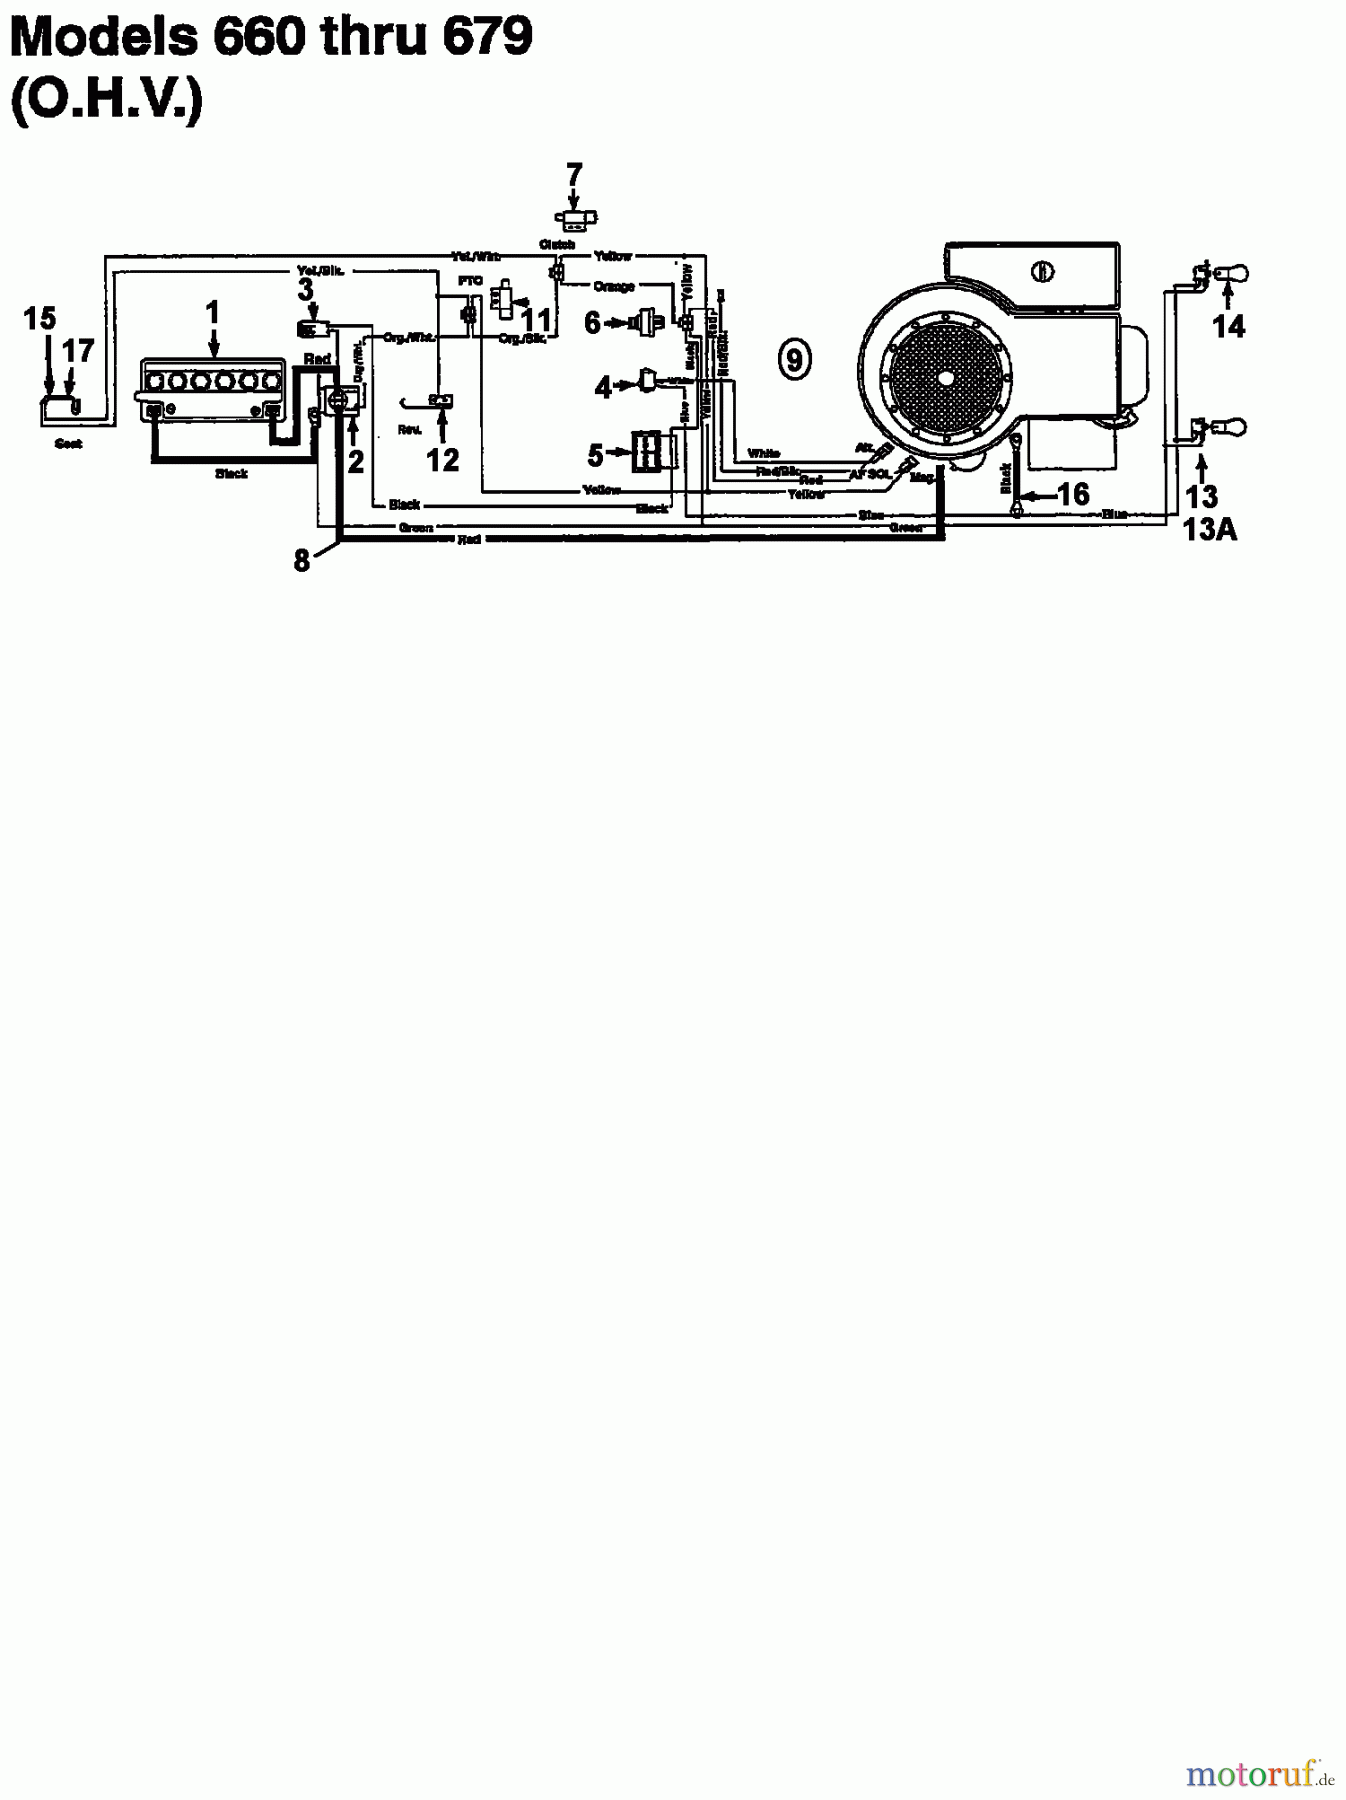  Florica Lawn tractors 12/76 HN 133I679C638  (1993) Wiring diagram for O.H.V.